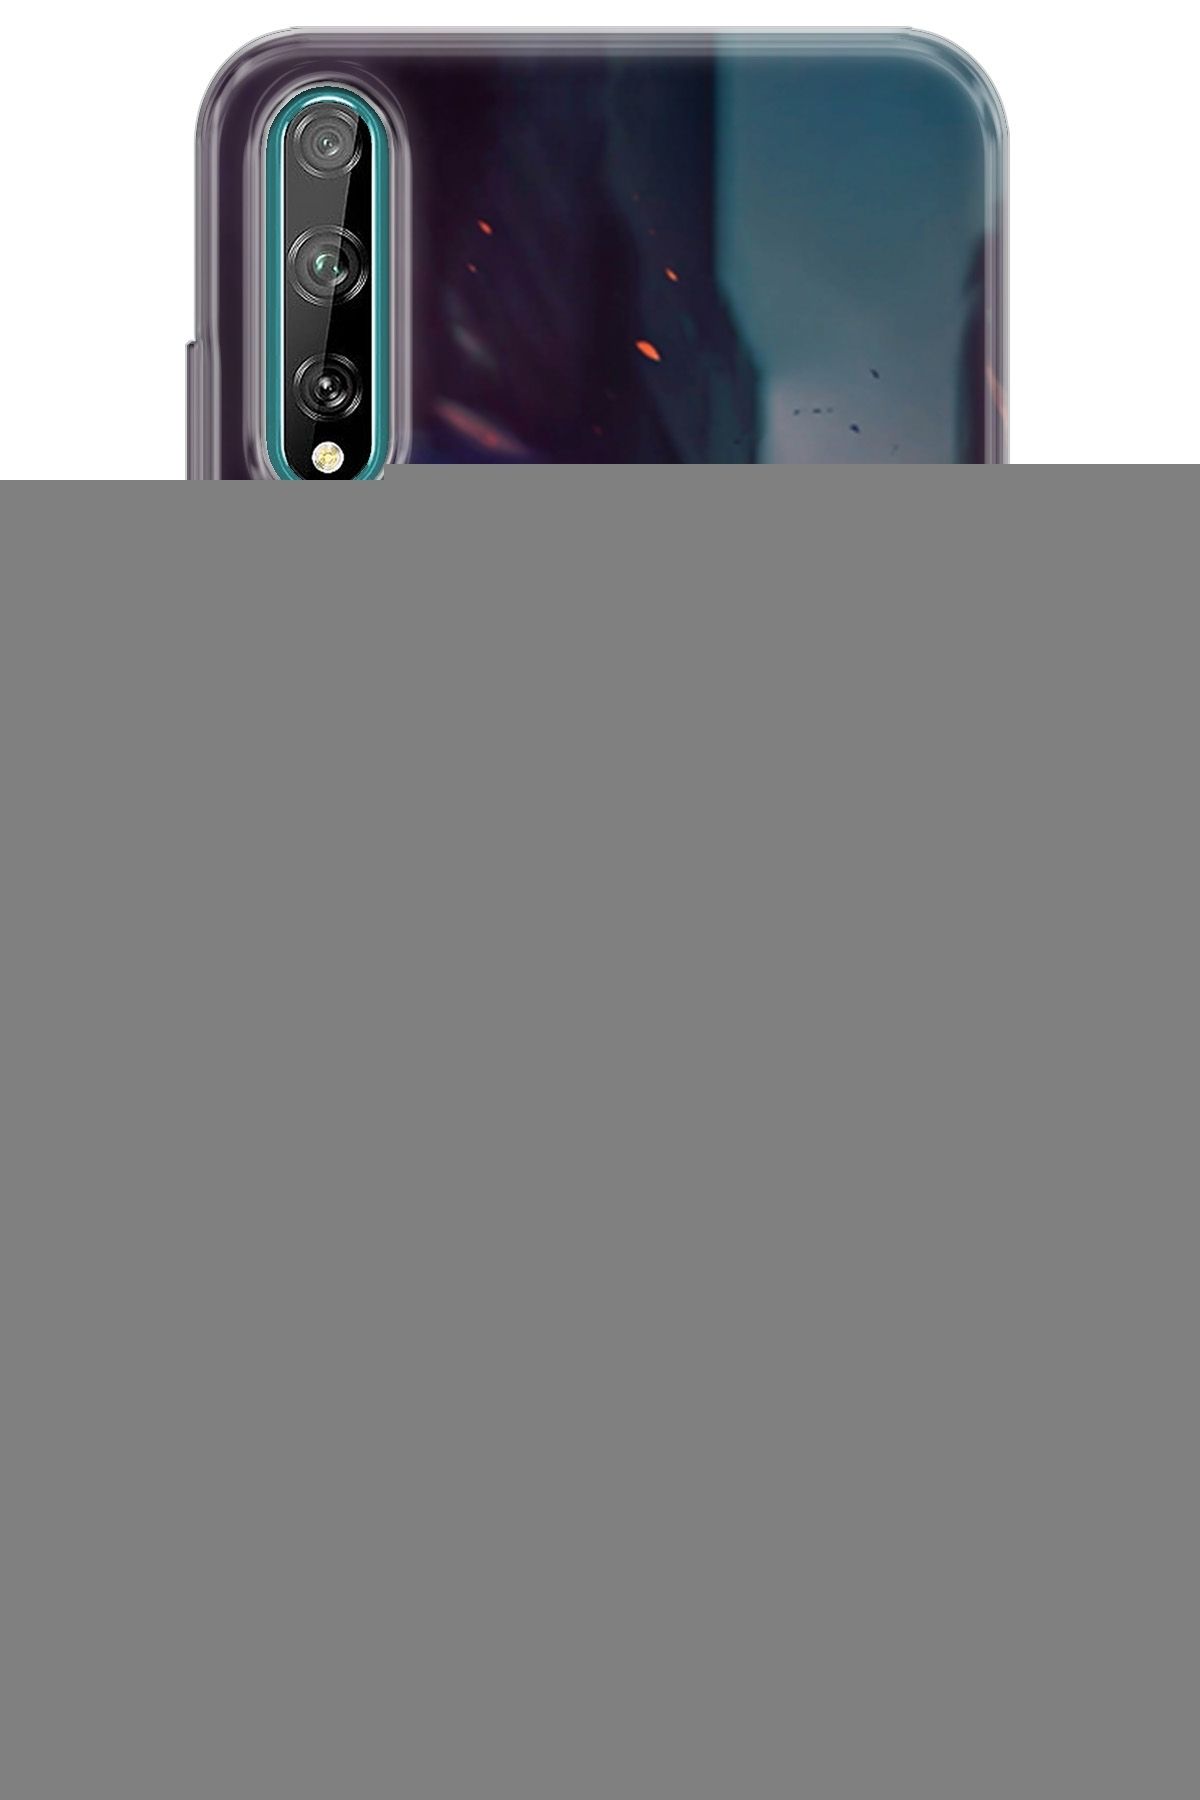 Lopard Huawei P Smart S 2020 Uyumlu Kılıf Milano 14 Ghost Rider Cover Kılıf Karışık Çok Renkli